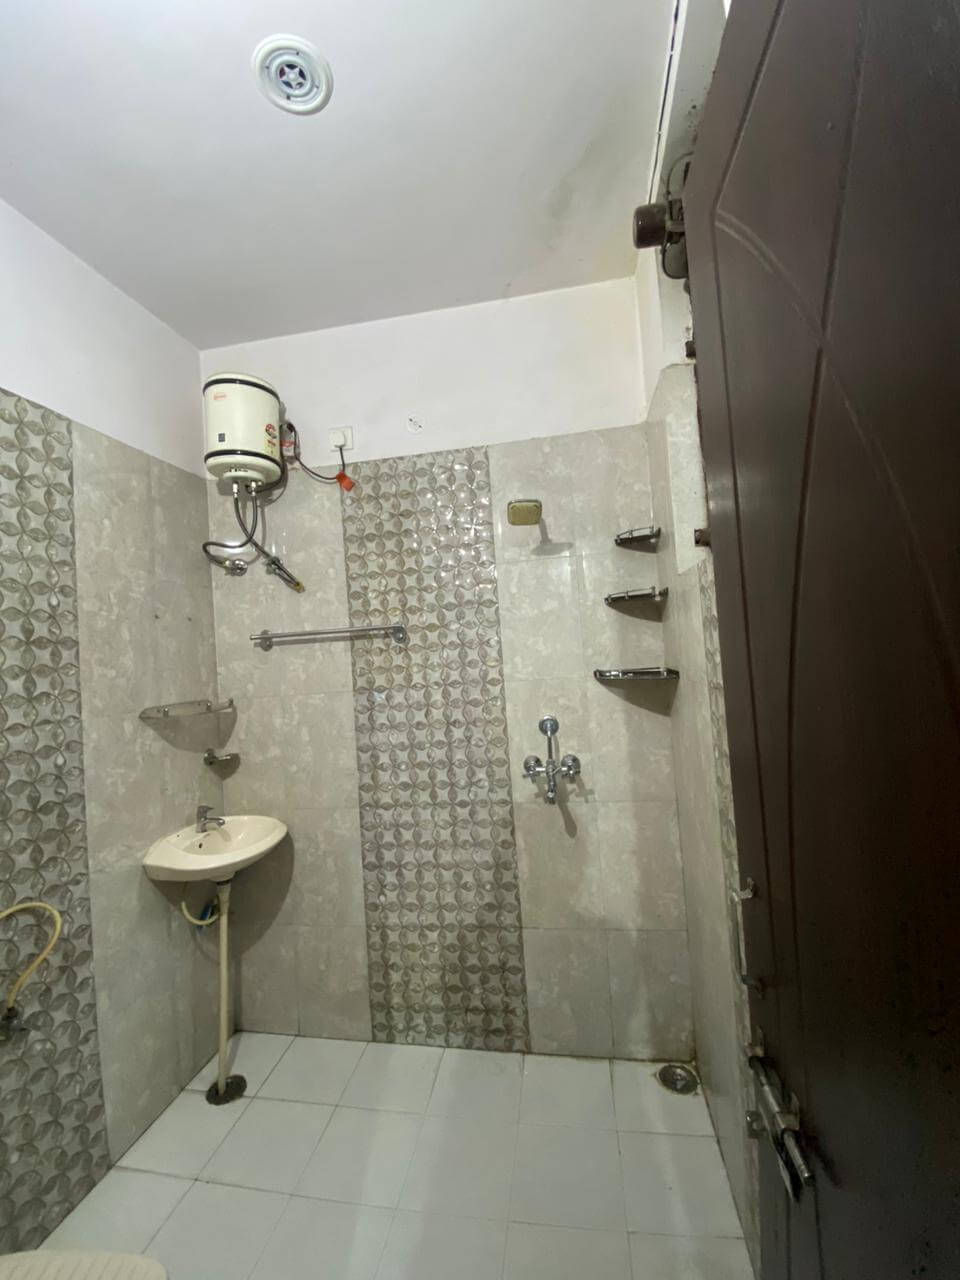 3 BHK Apartment / Flat for Rent 1200 Sq. Feet at Jaipur
, Jagatpura